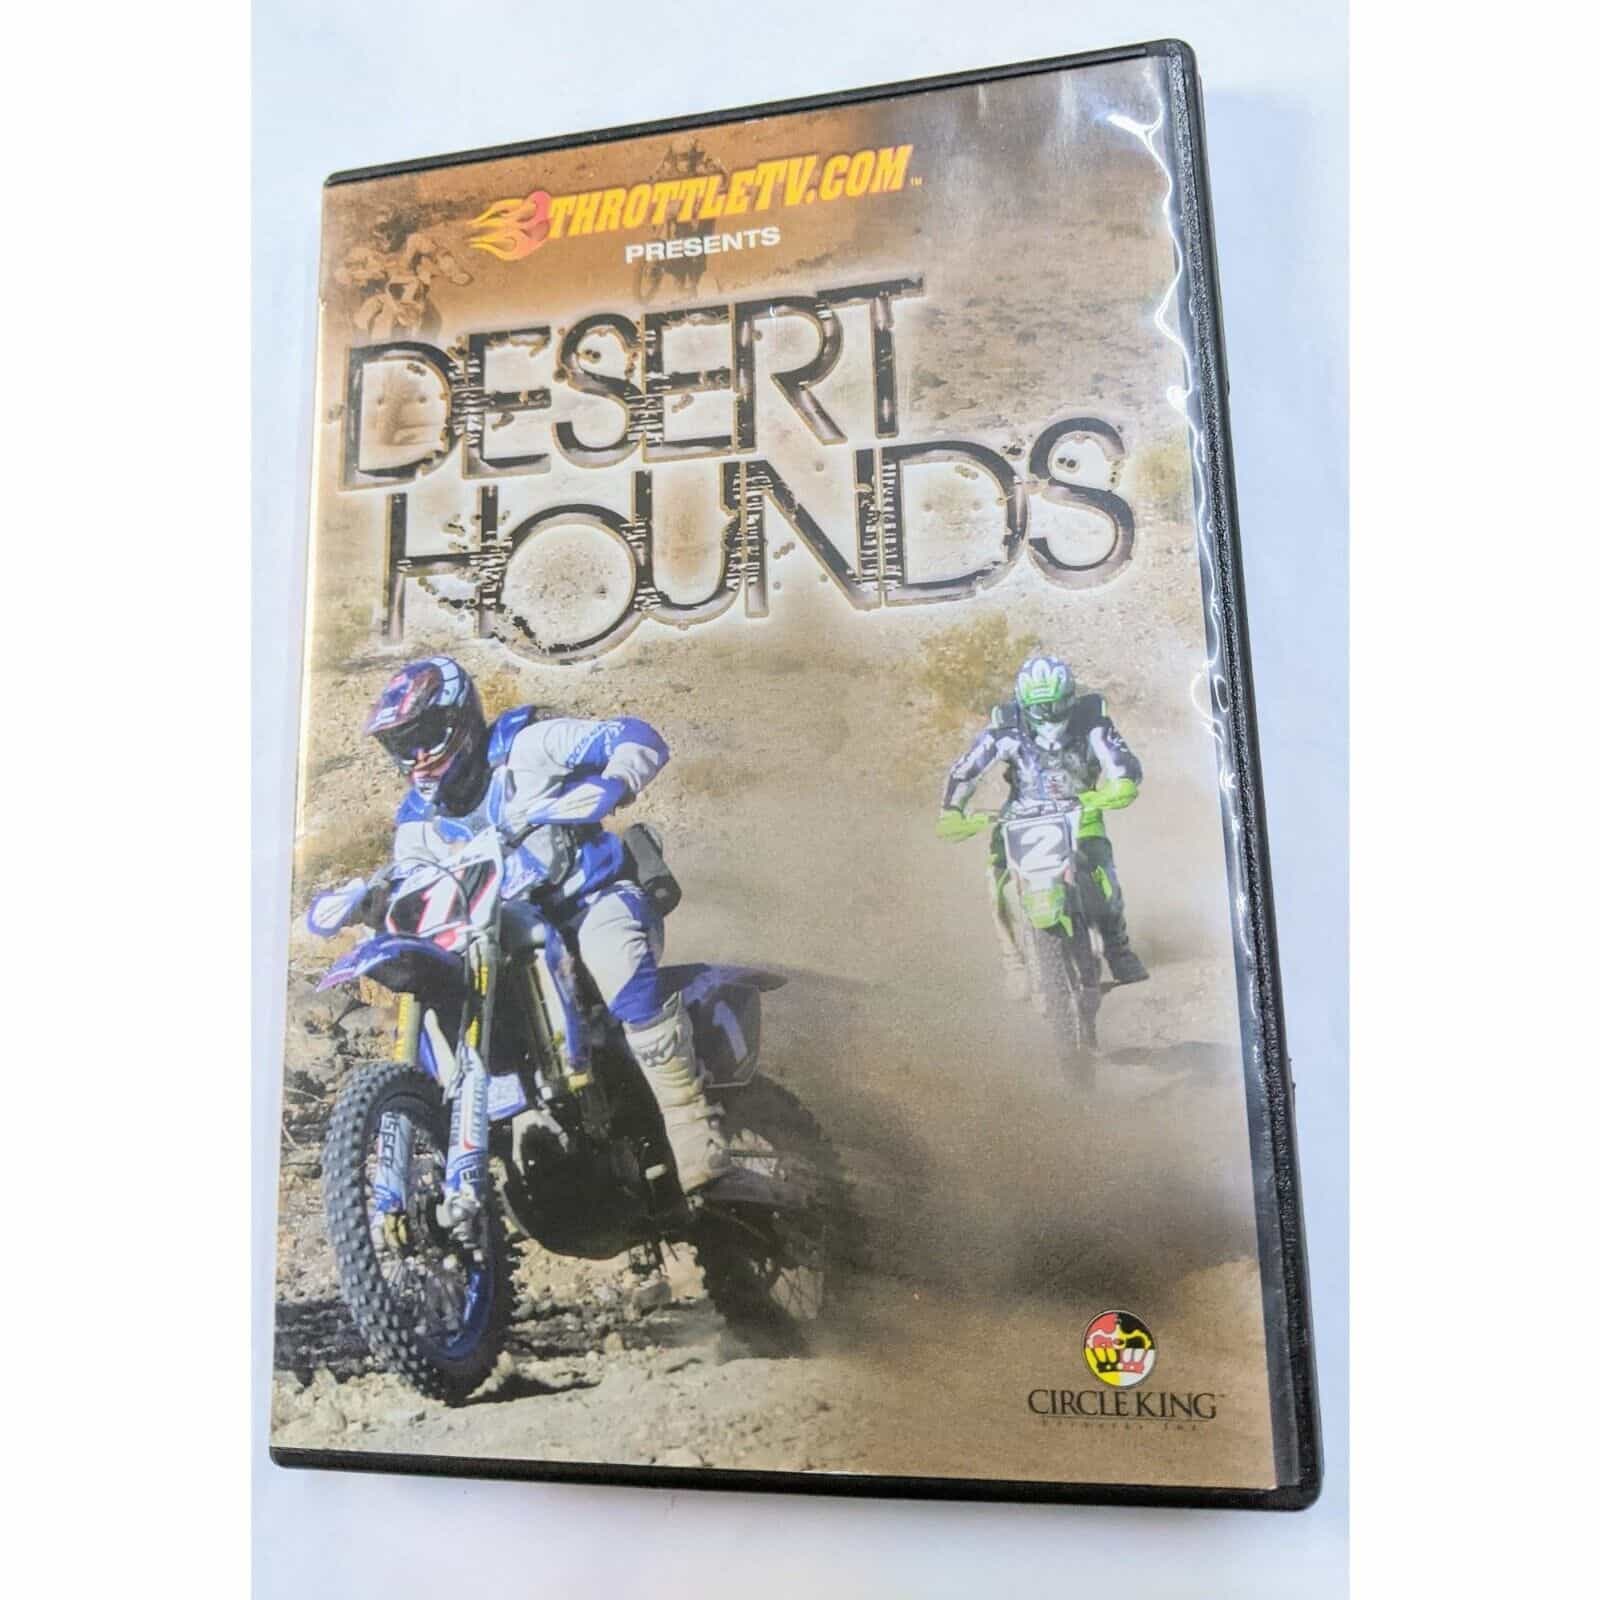 Desert Hounds Motor Cycle Sport DVD Documentary Movie